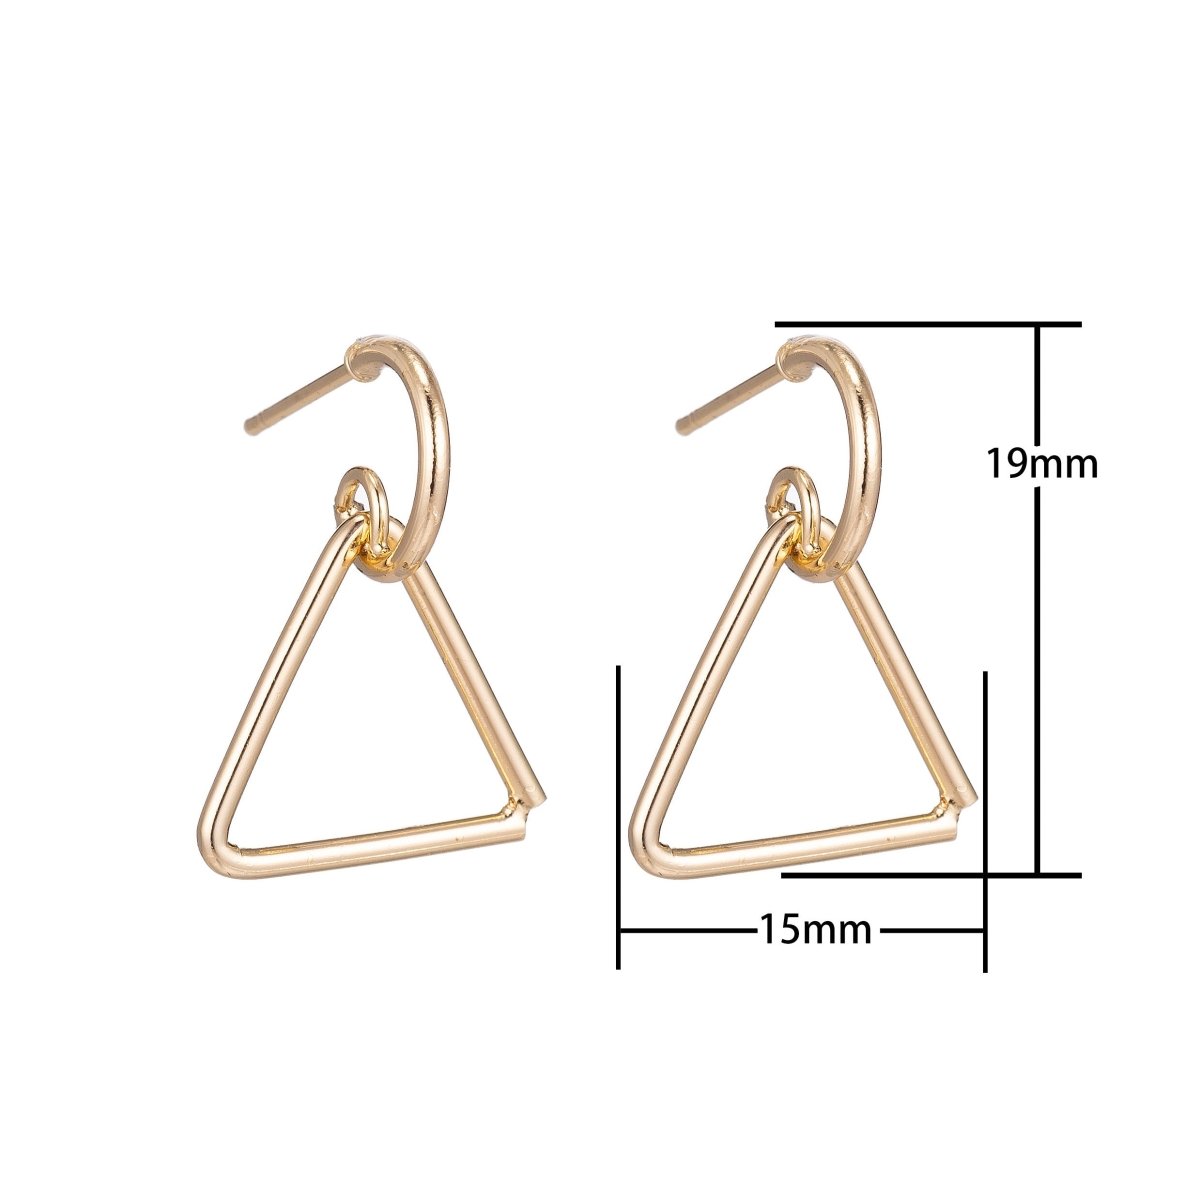 18k Gold Filled Triangle Earrings Post, Handmade Stud Earrings, Geometric Earring Making Findings for Jewelry Making Supplies K-019 - DLUXCA